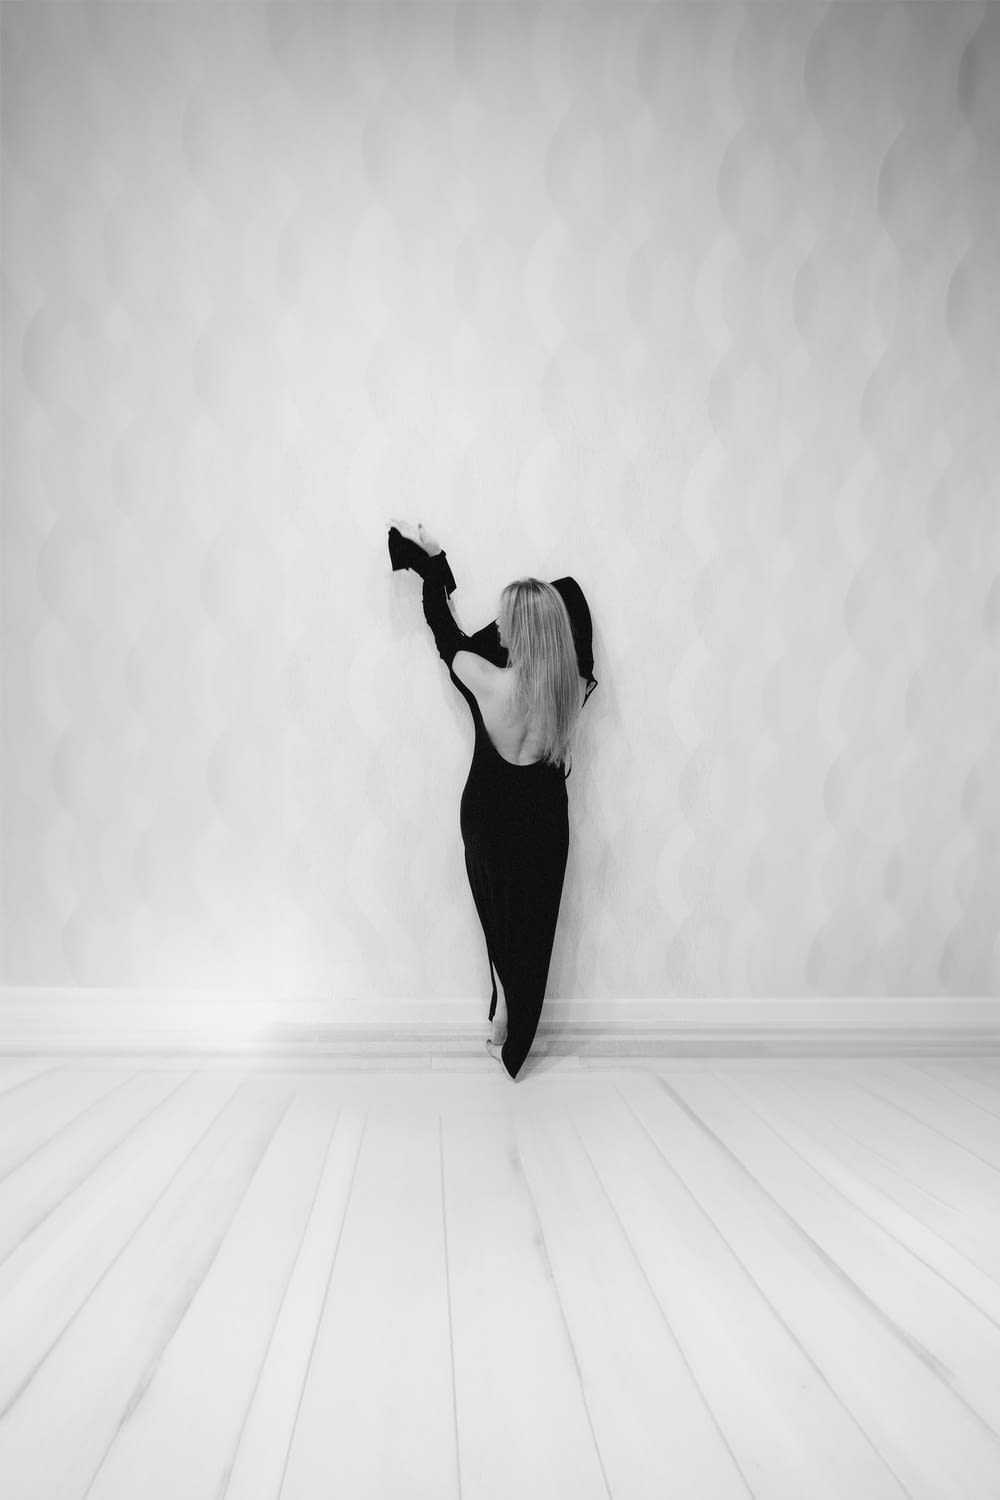 a woman in a black dress is dancing